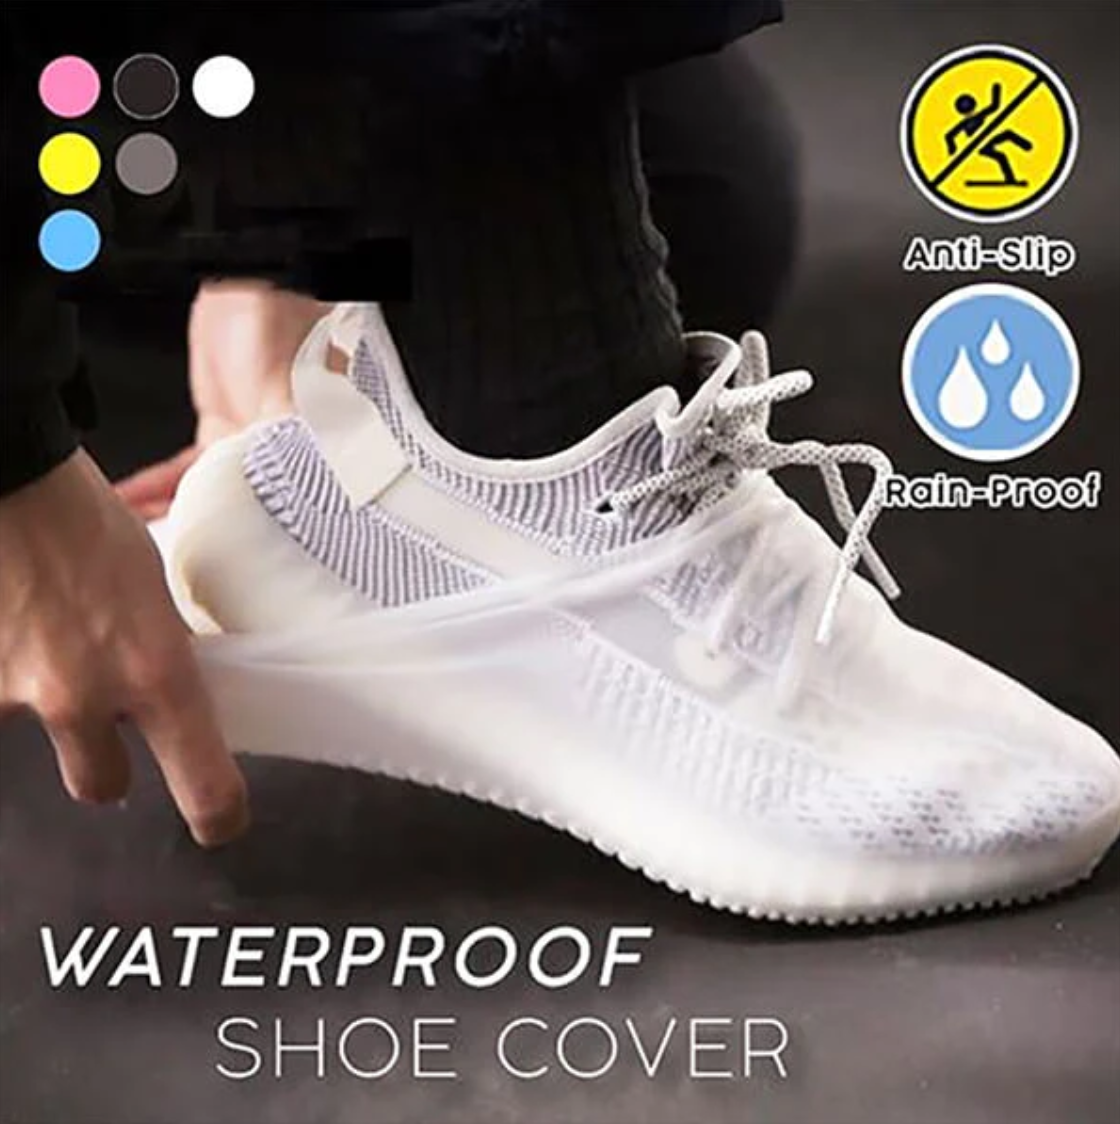 WaterProof Shoe Cover